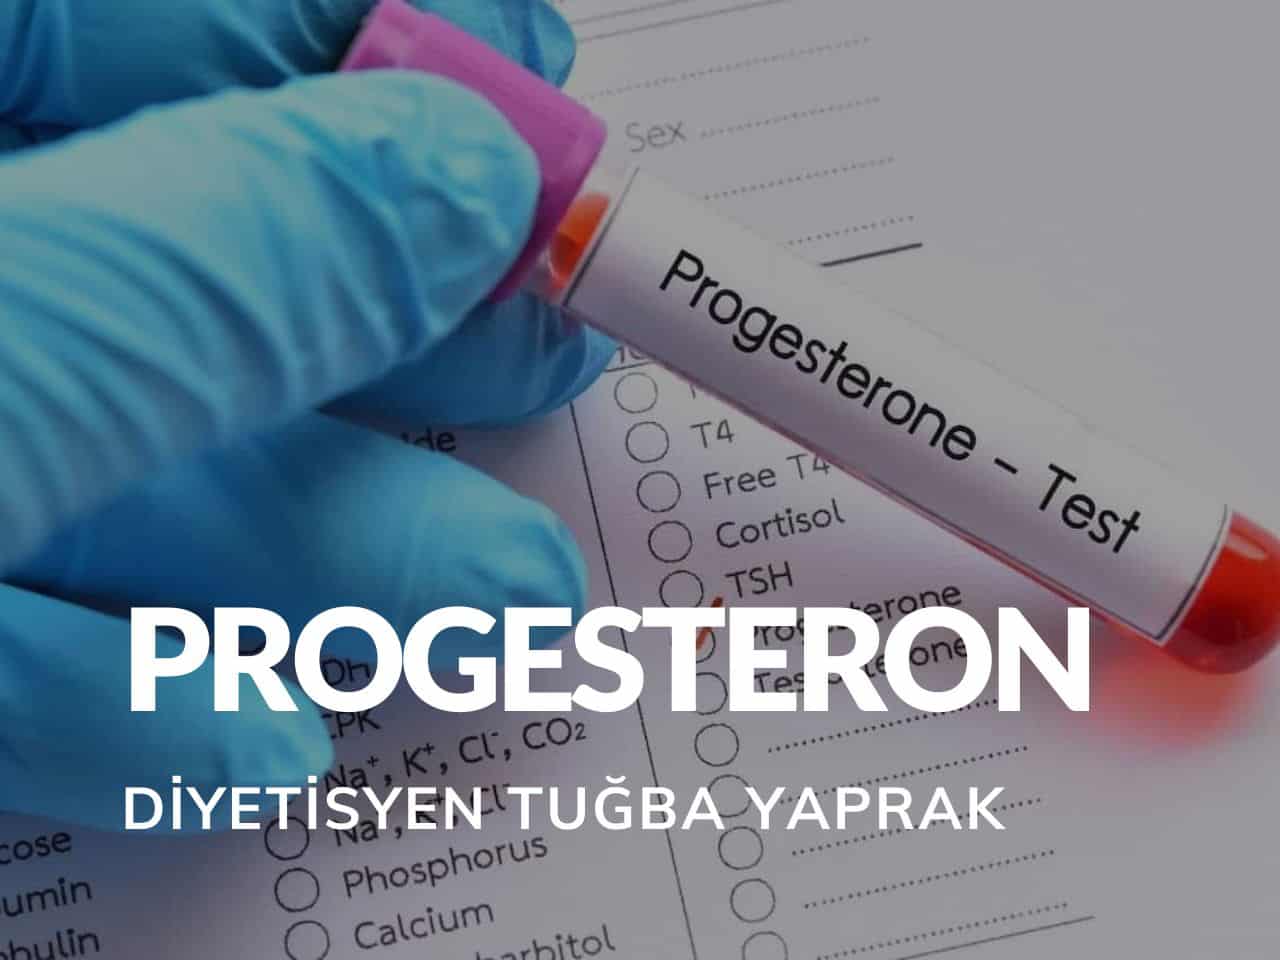 Progesteron